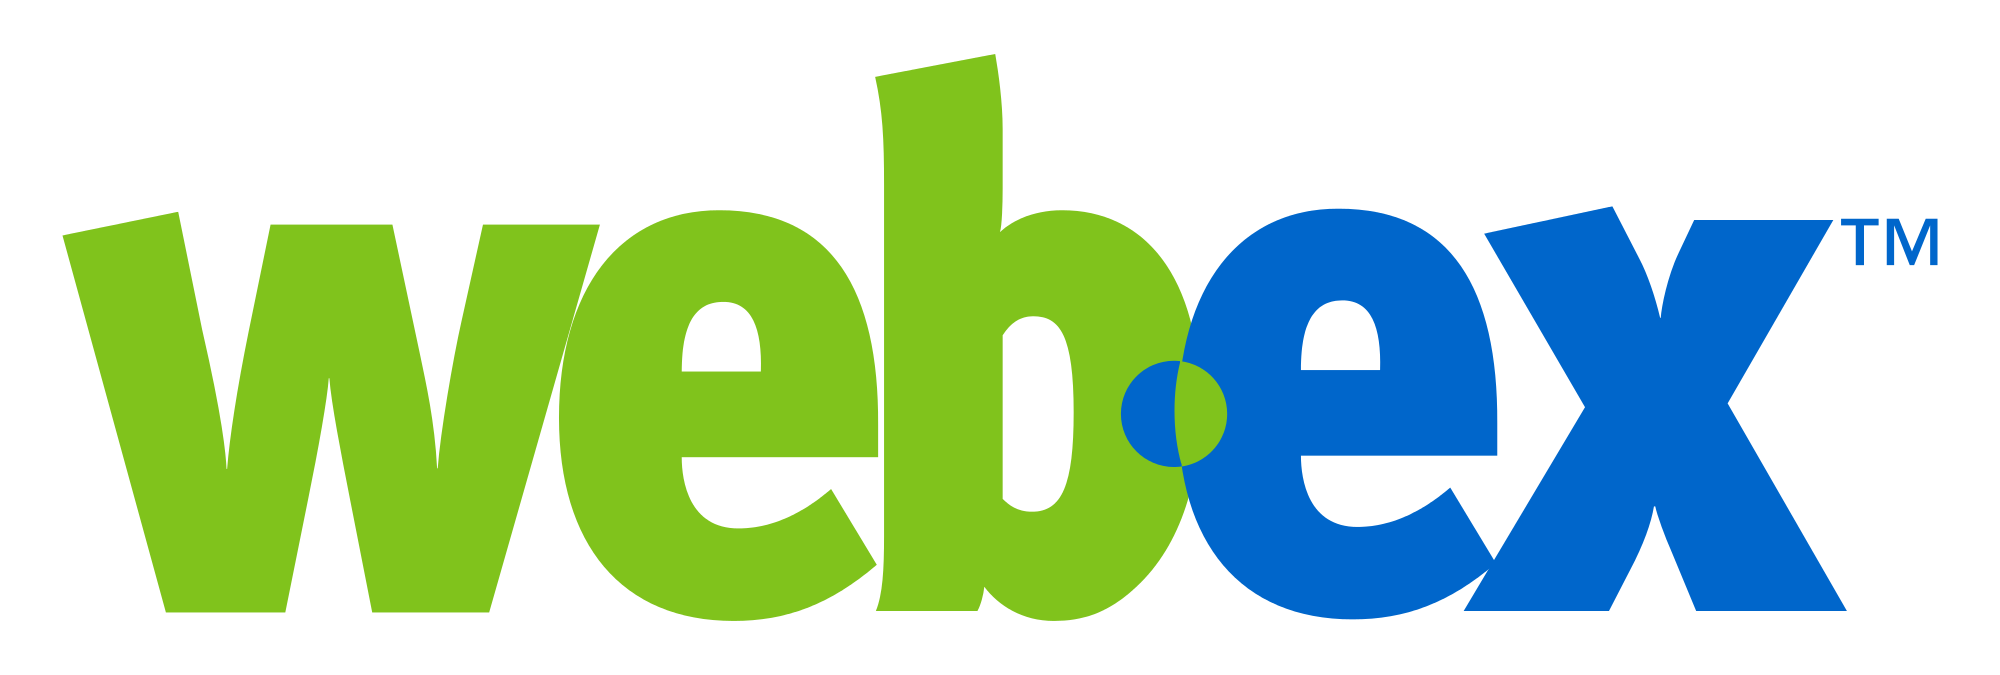 WebEx_logo.png